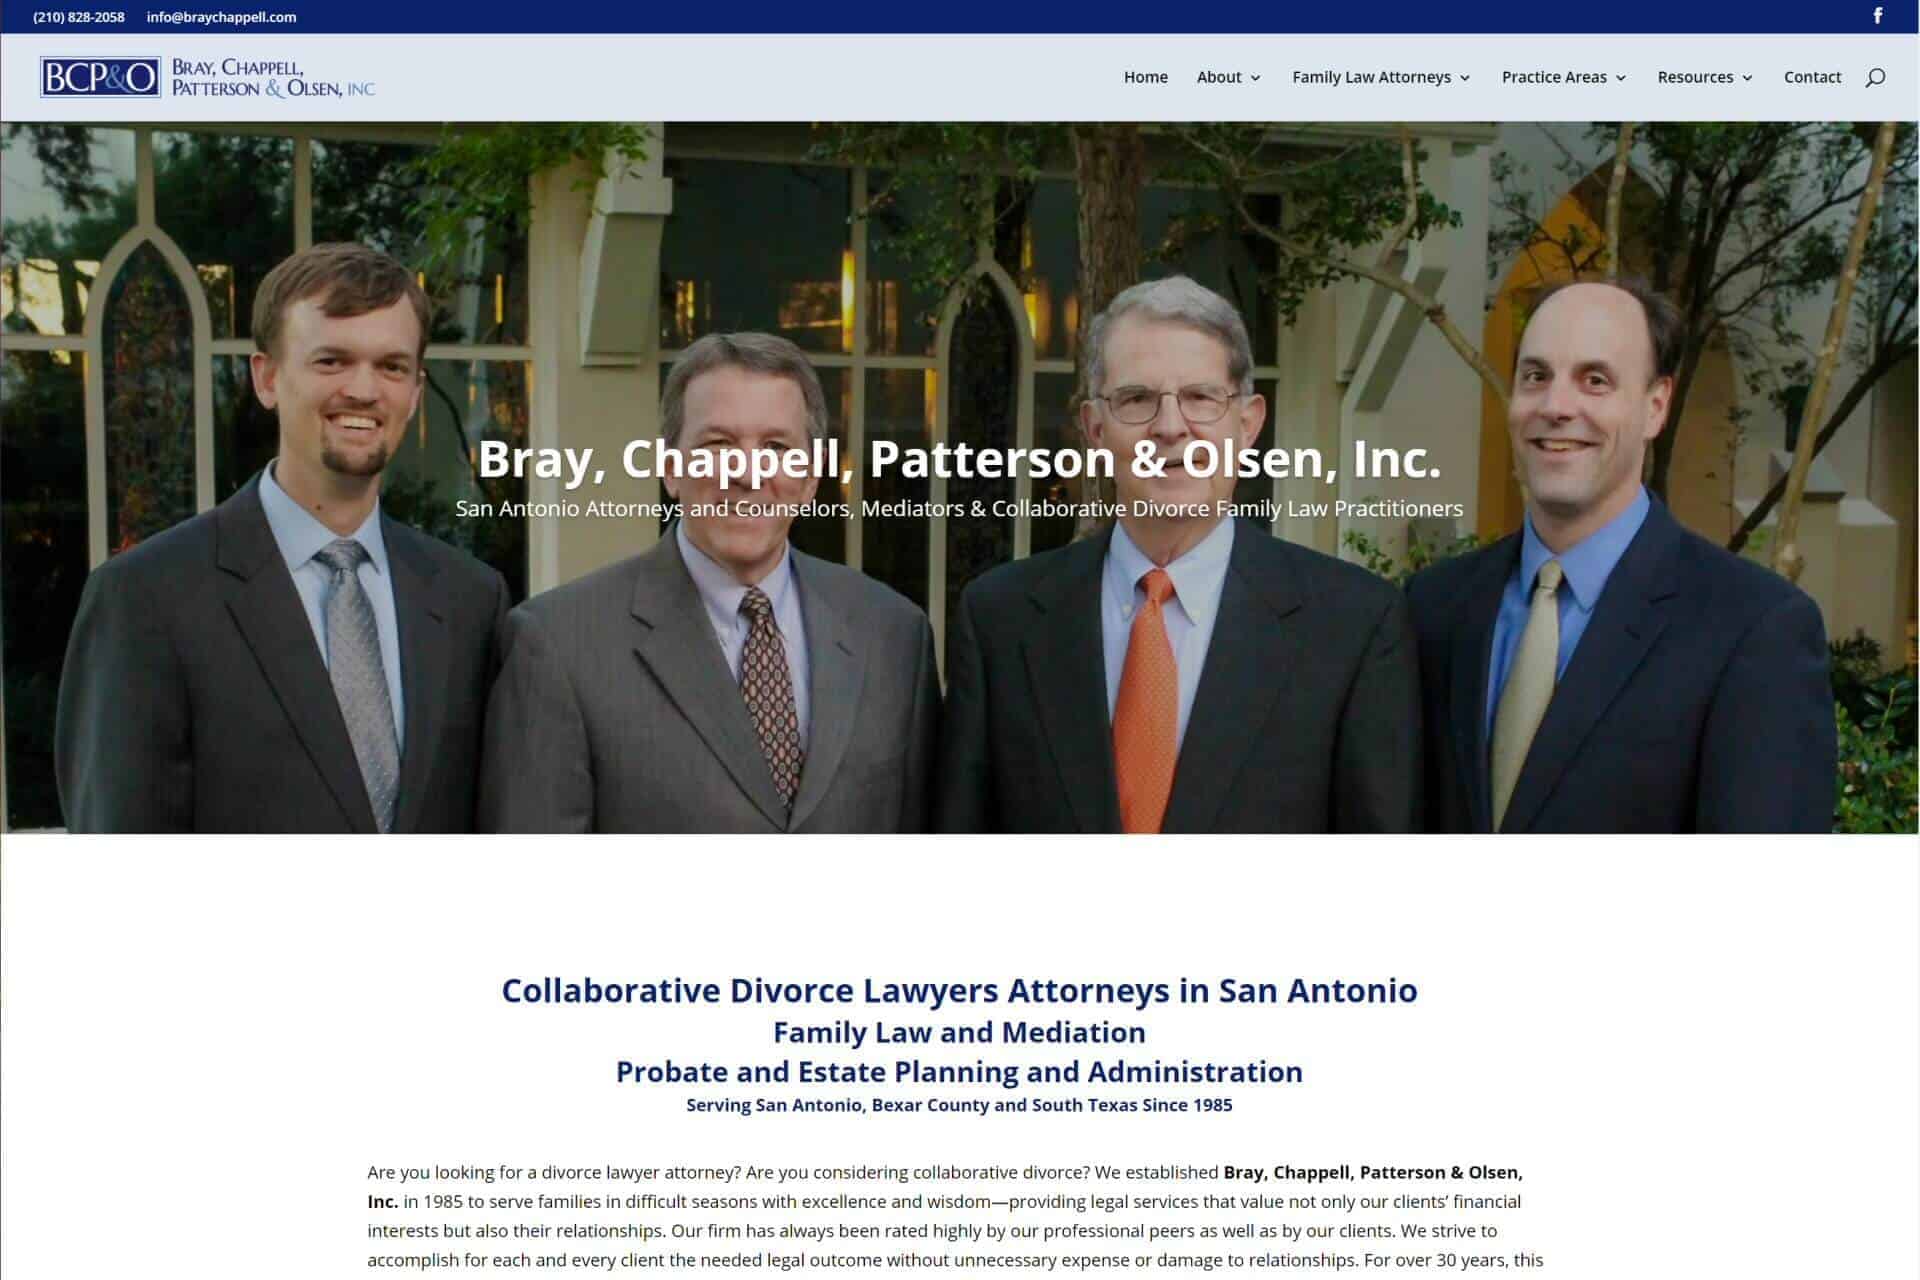 Bray, Chappell, Patterson & Olsen, Inc. by Polymics, Ltd.